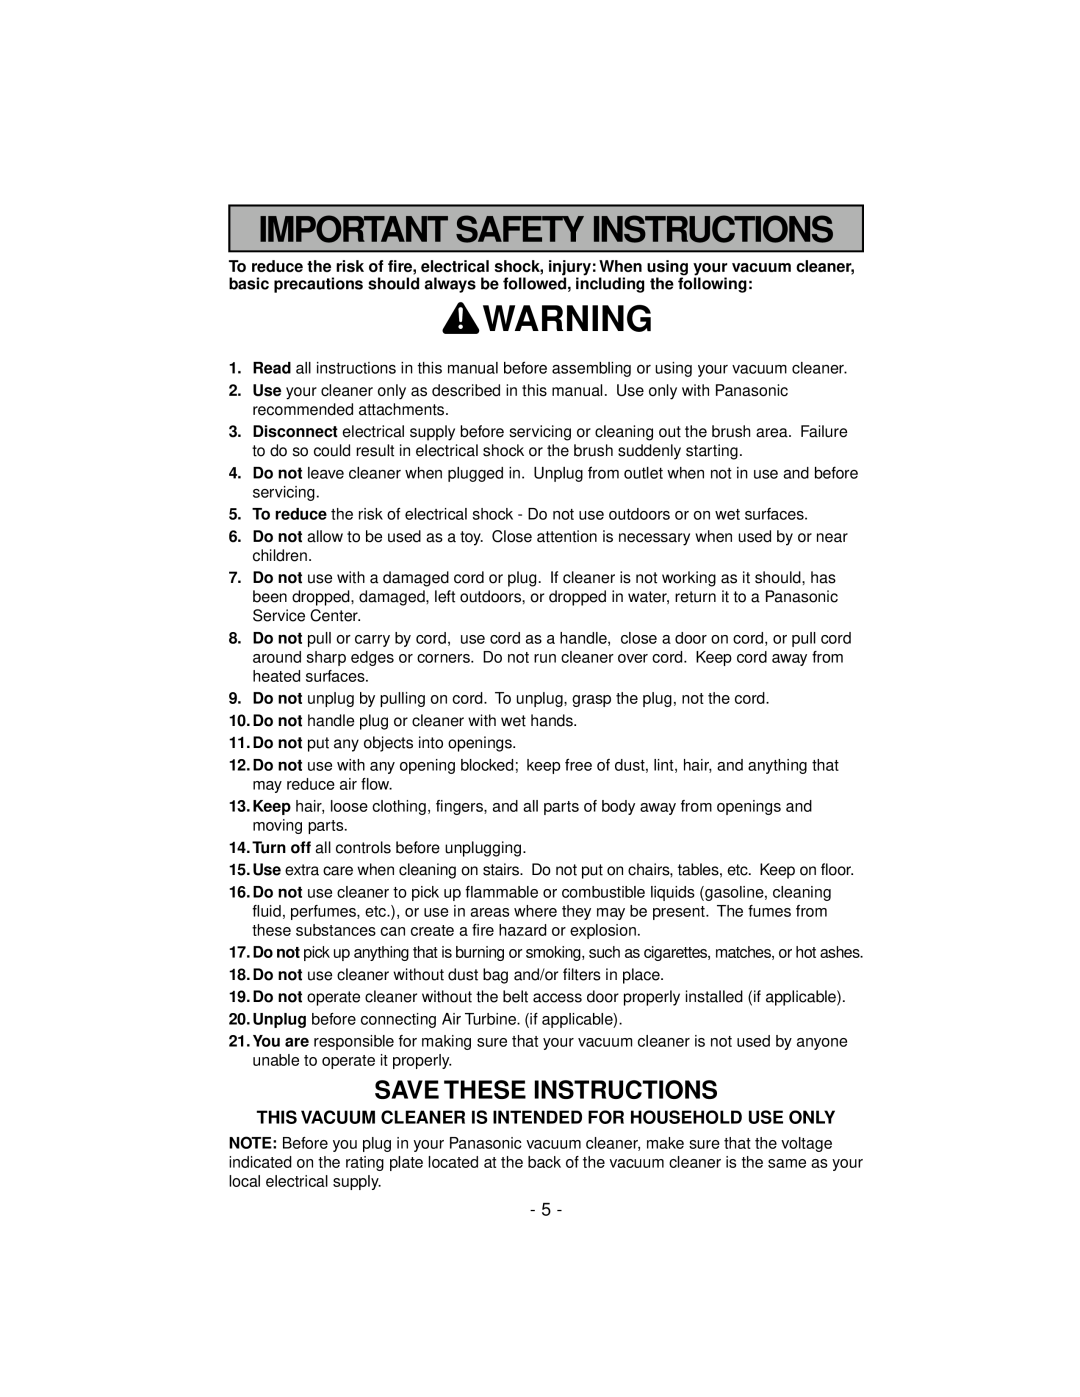 Panasonic MC-V7600 operating instructions Important Safety Instructions, Save These Instructions 